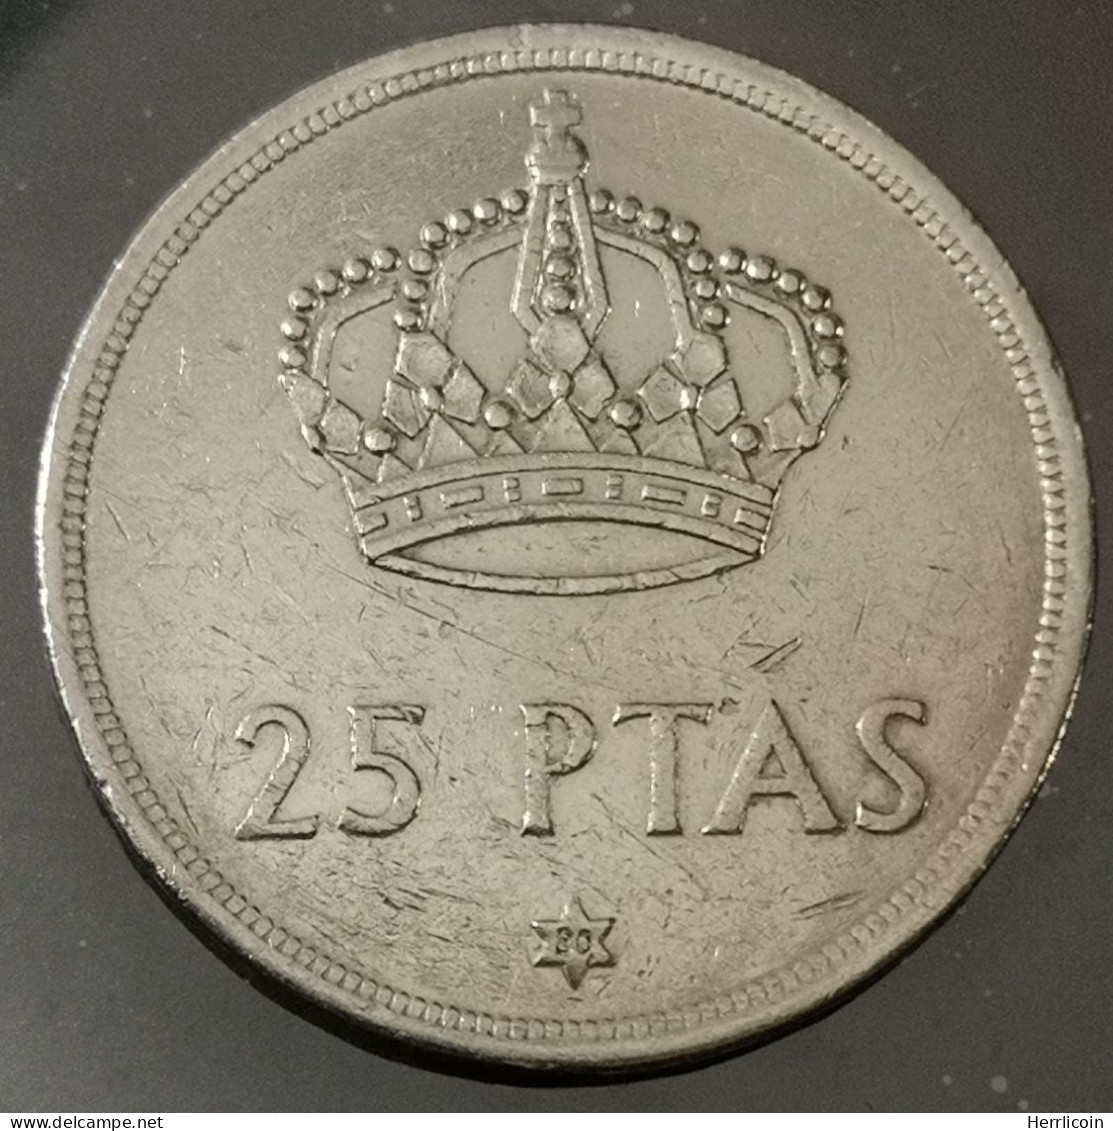 Monnaie Espagne - 1980 - 25 Pesetas Juan Carlos I étoile - 25 Pesetas